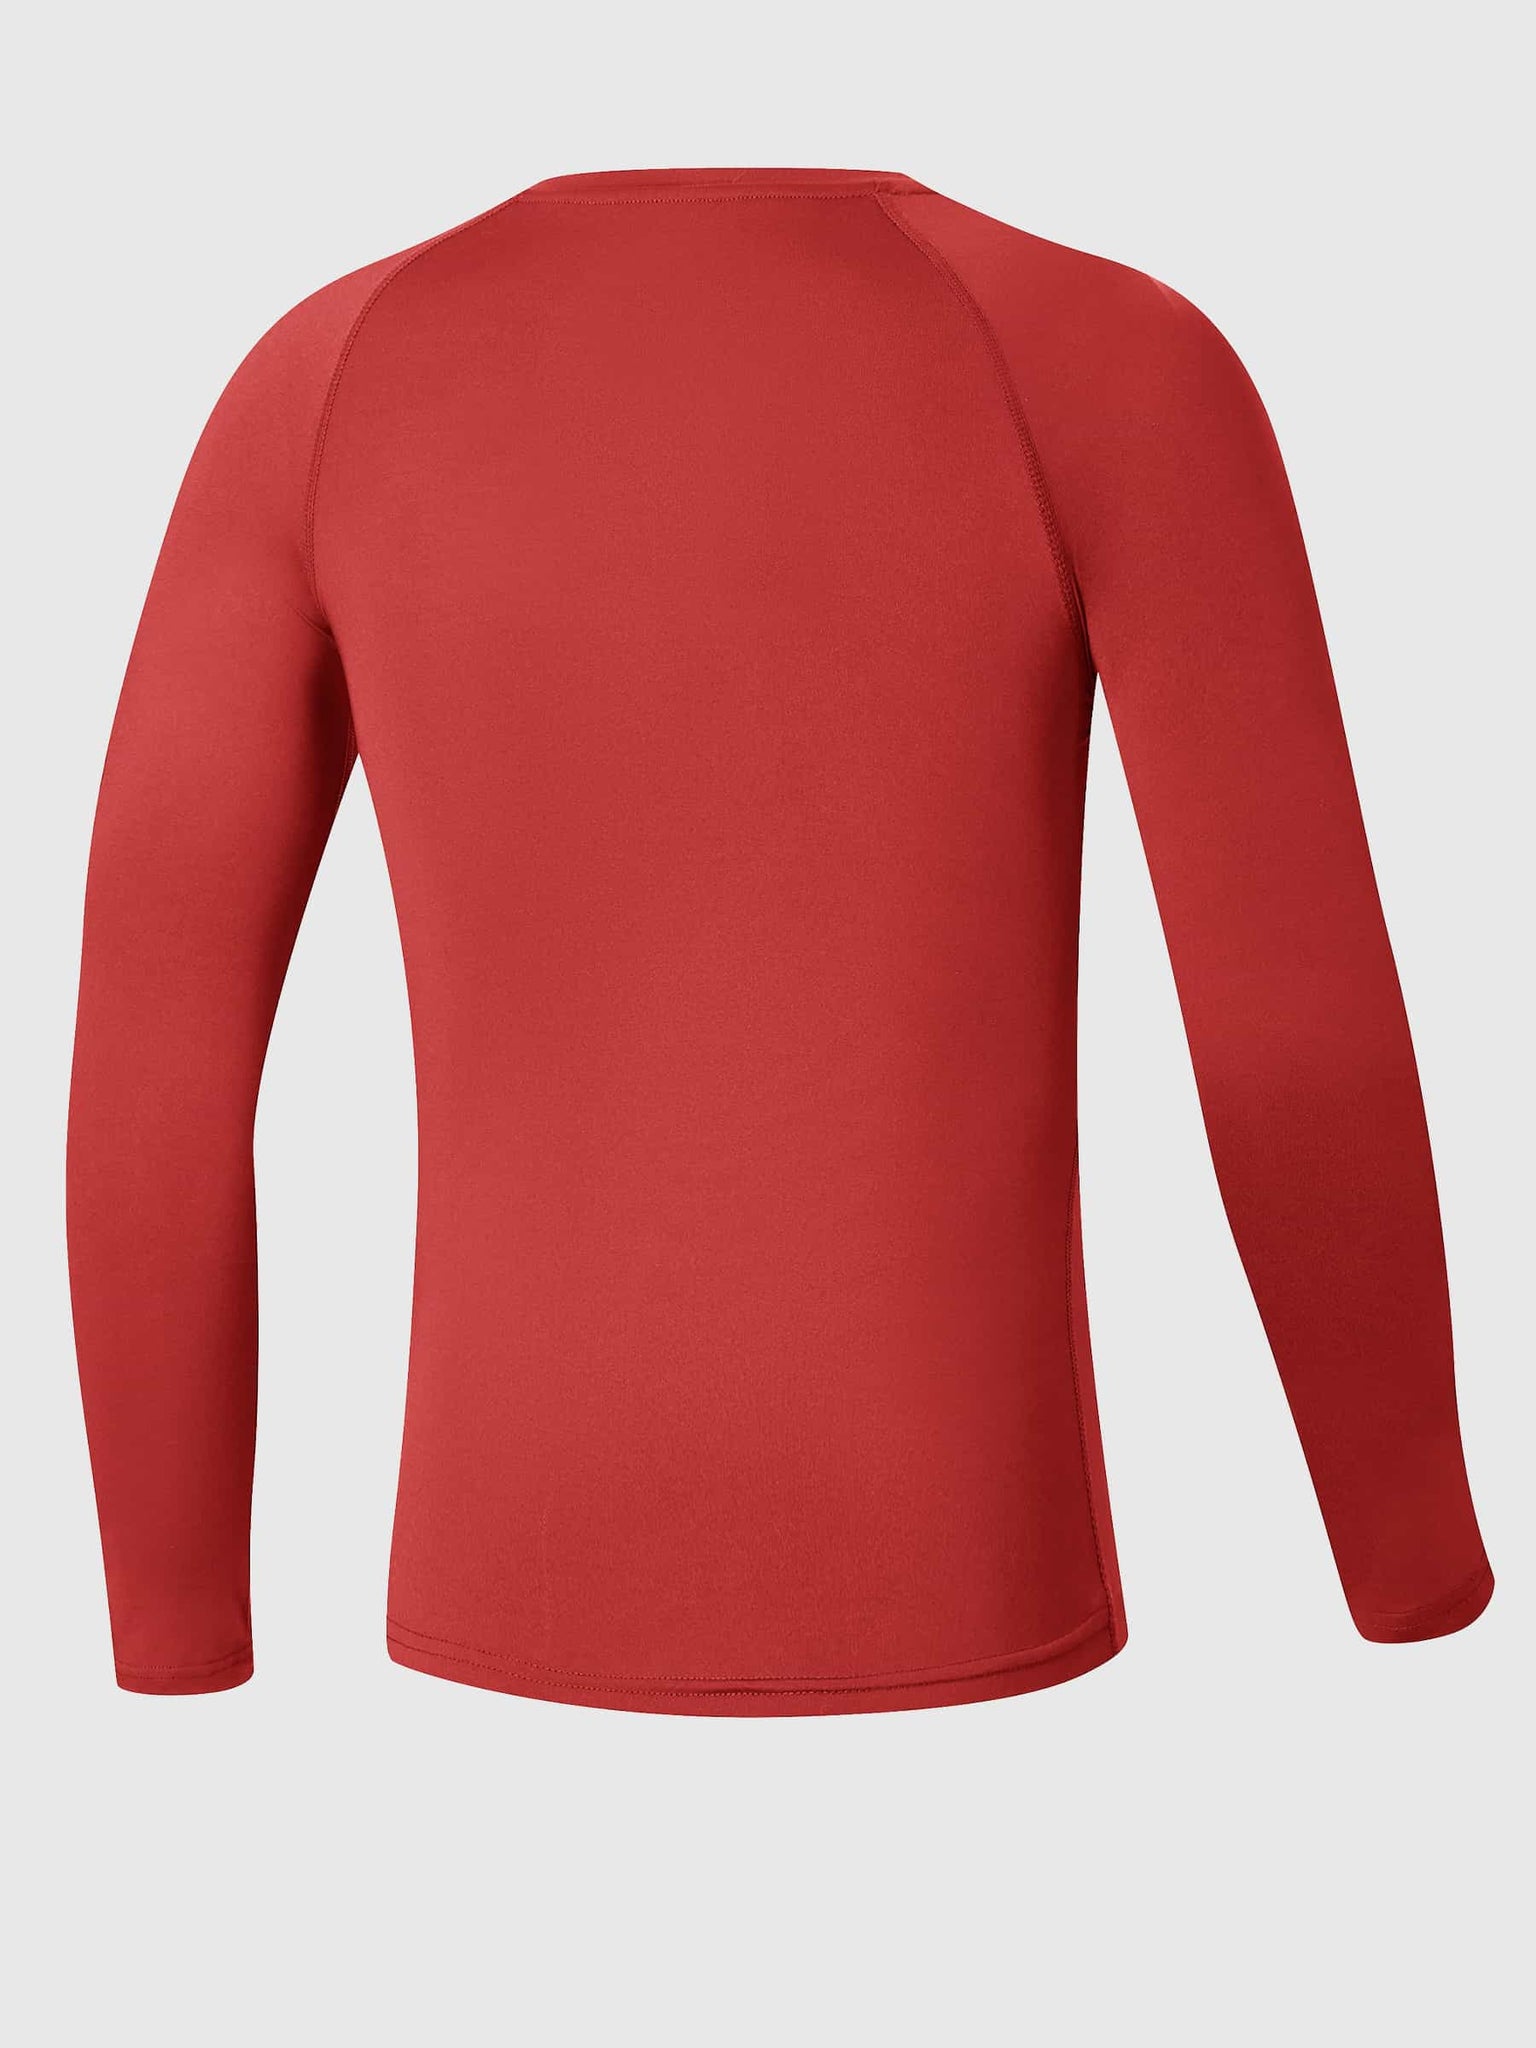 Boys Long-Sleeve Soccer Undershirt_Red_laydown3